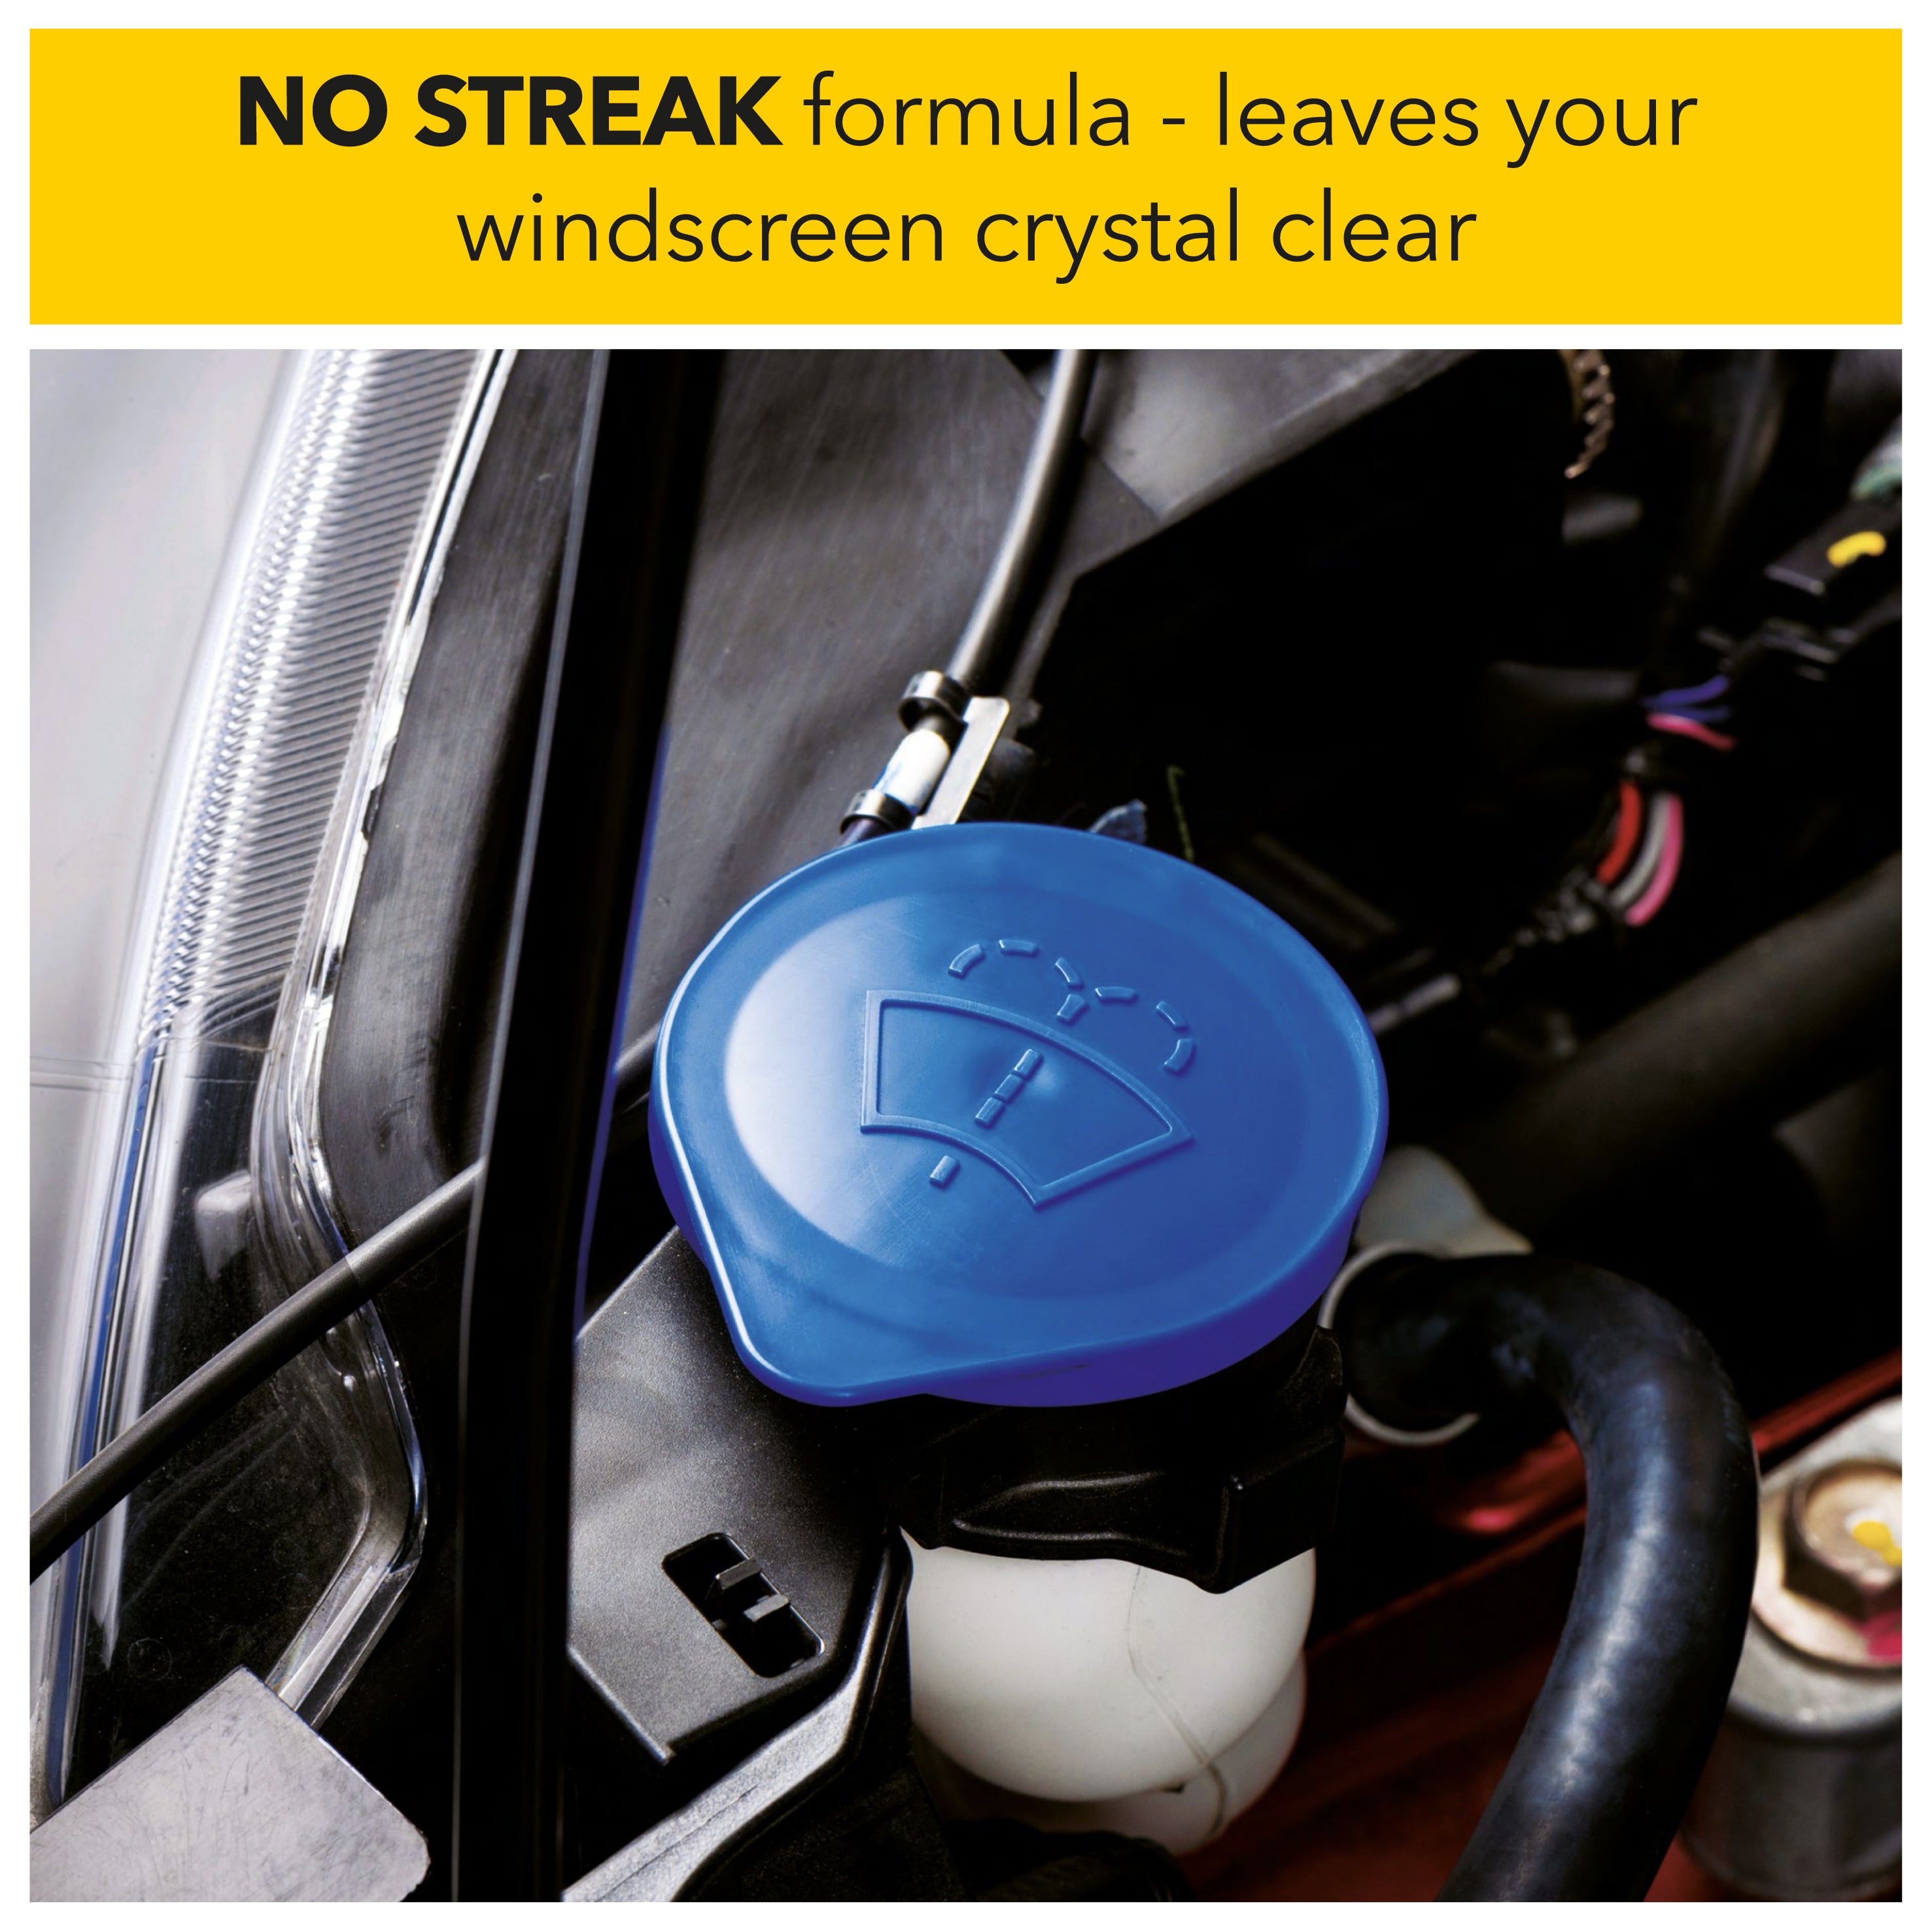 no streak formula - leaves your car windscreen crystal clear